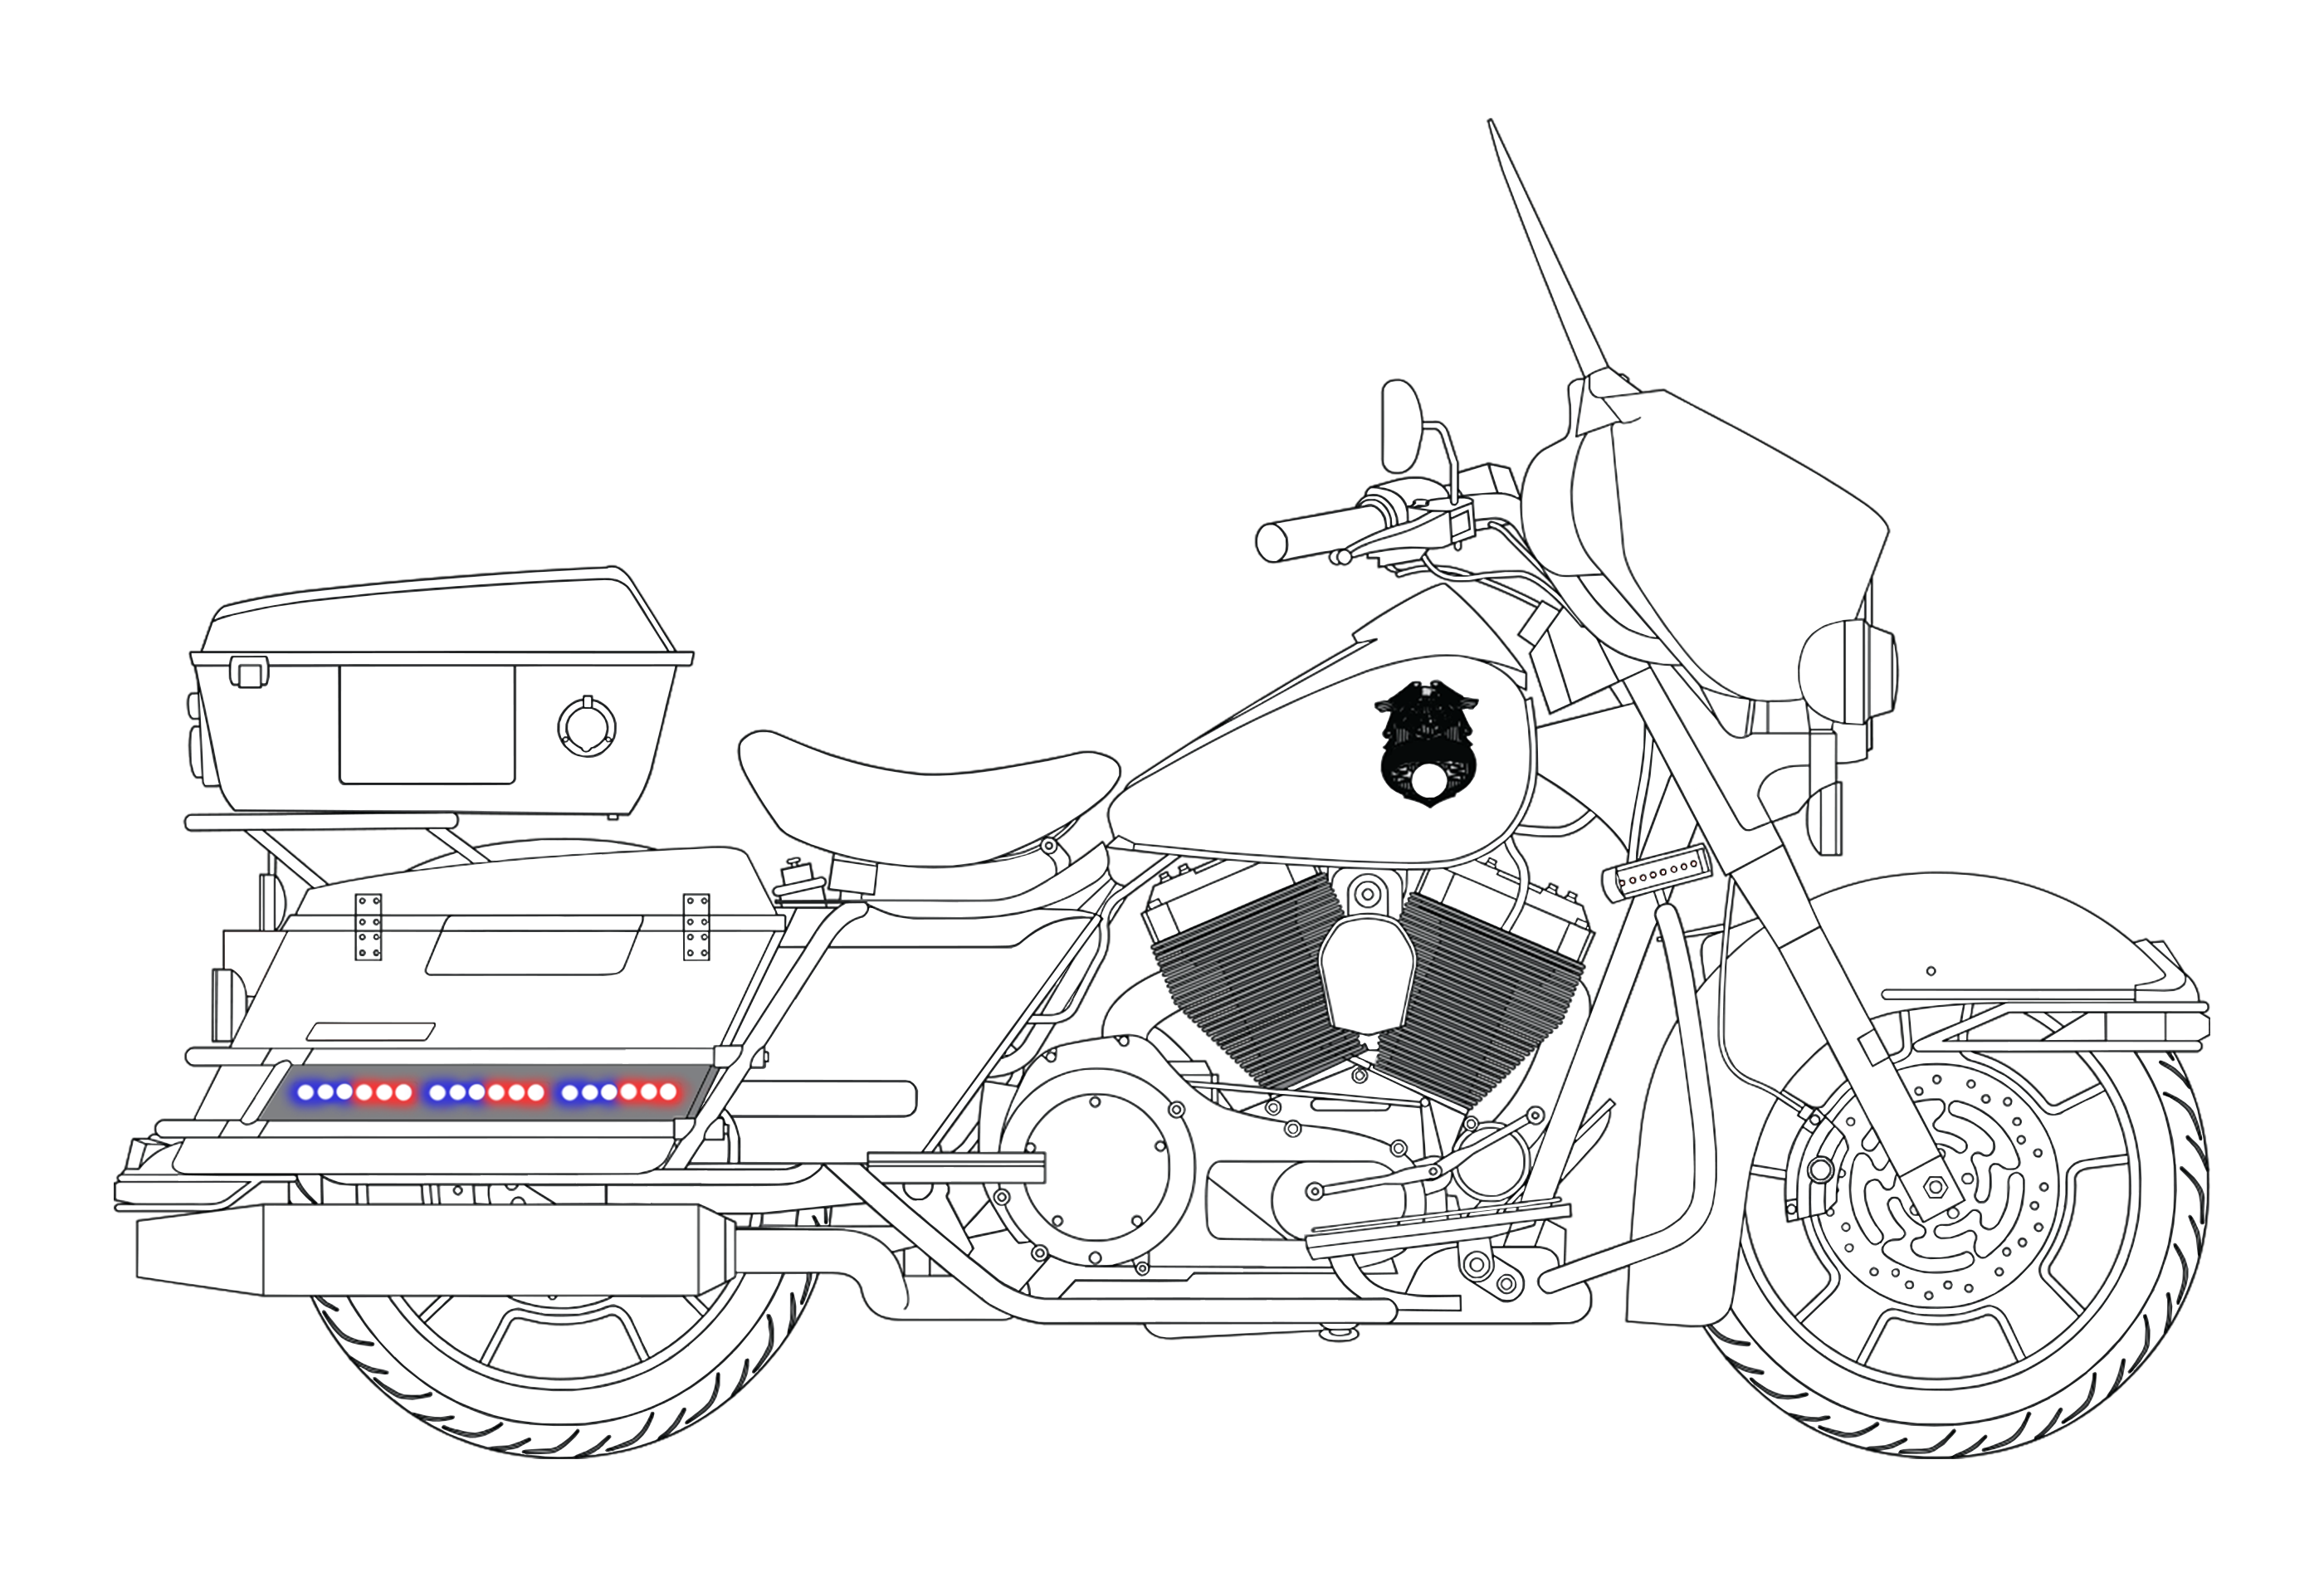 harley davidson motorcycles for police hg2 Emergency Vehicle Lighting saddle bag lights (motorcycle led)